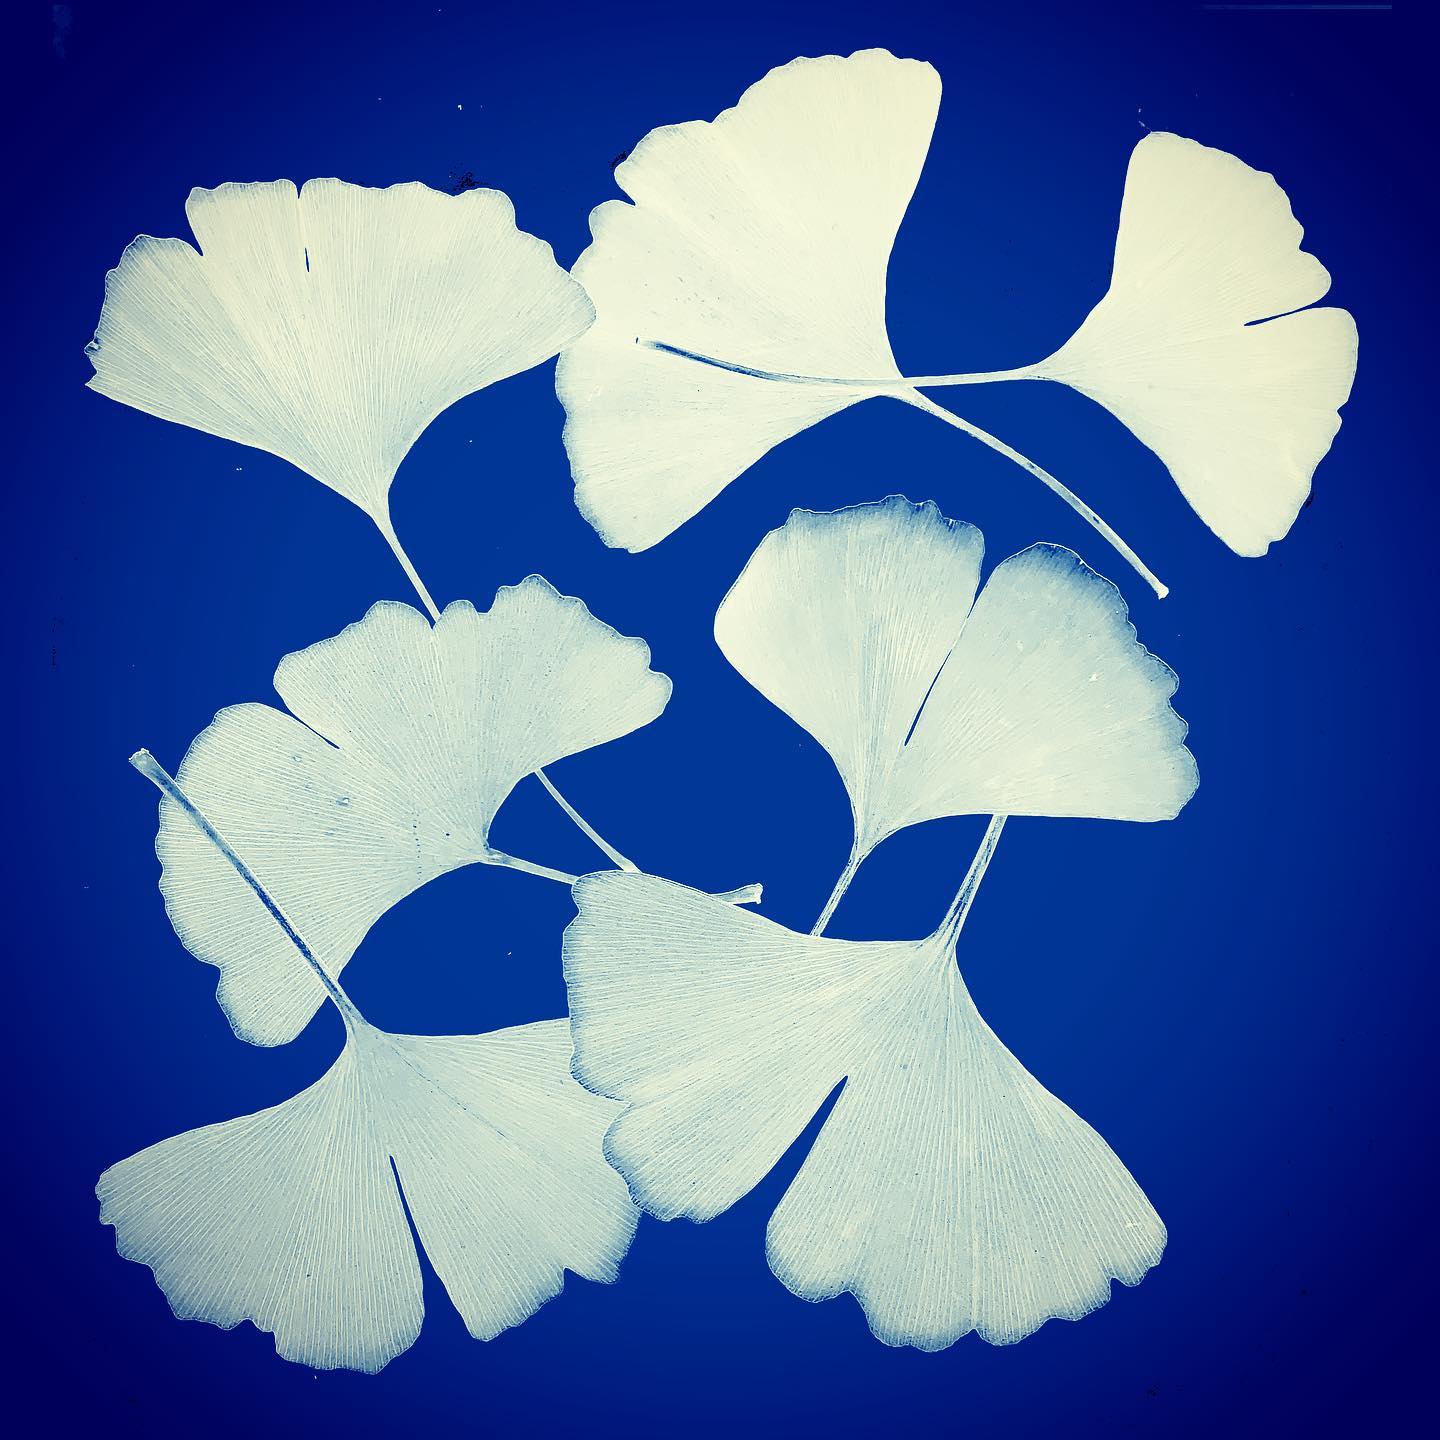 Laurel Sumac flowers (Malosma) #flower #tree #nature #outdoors #californianative #california #pasadena #bw #blackandwhite #blackandwhitephotography via Instagram [Photo]